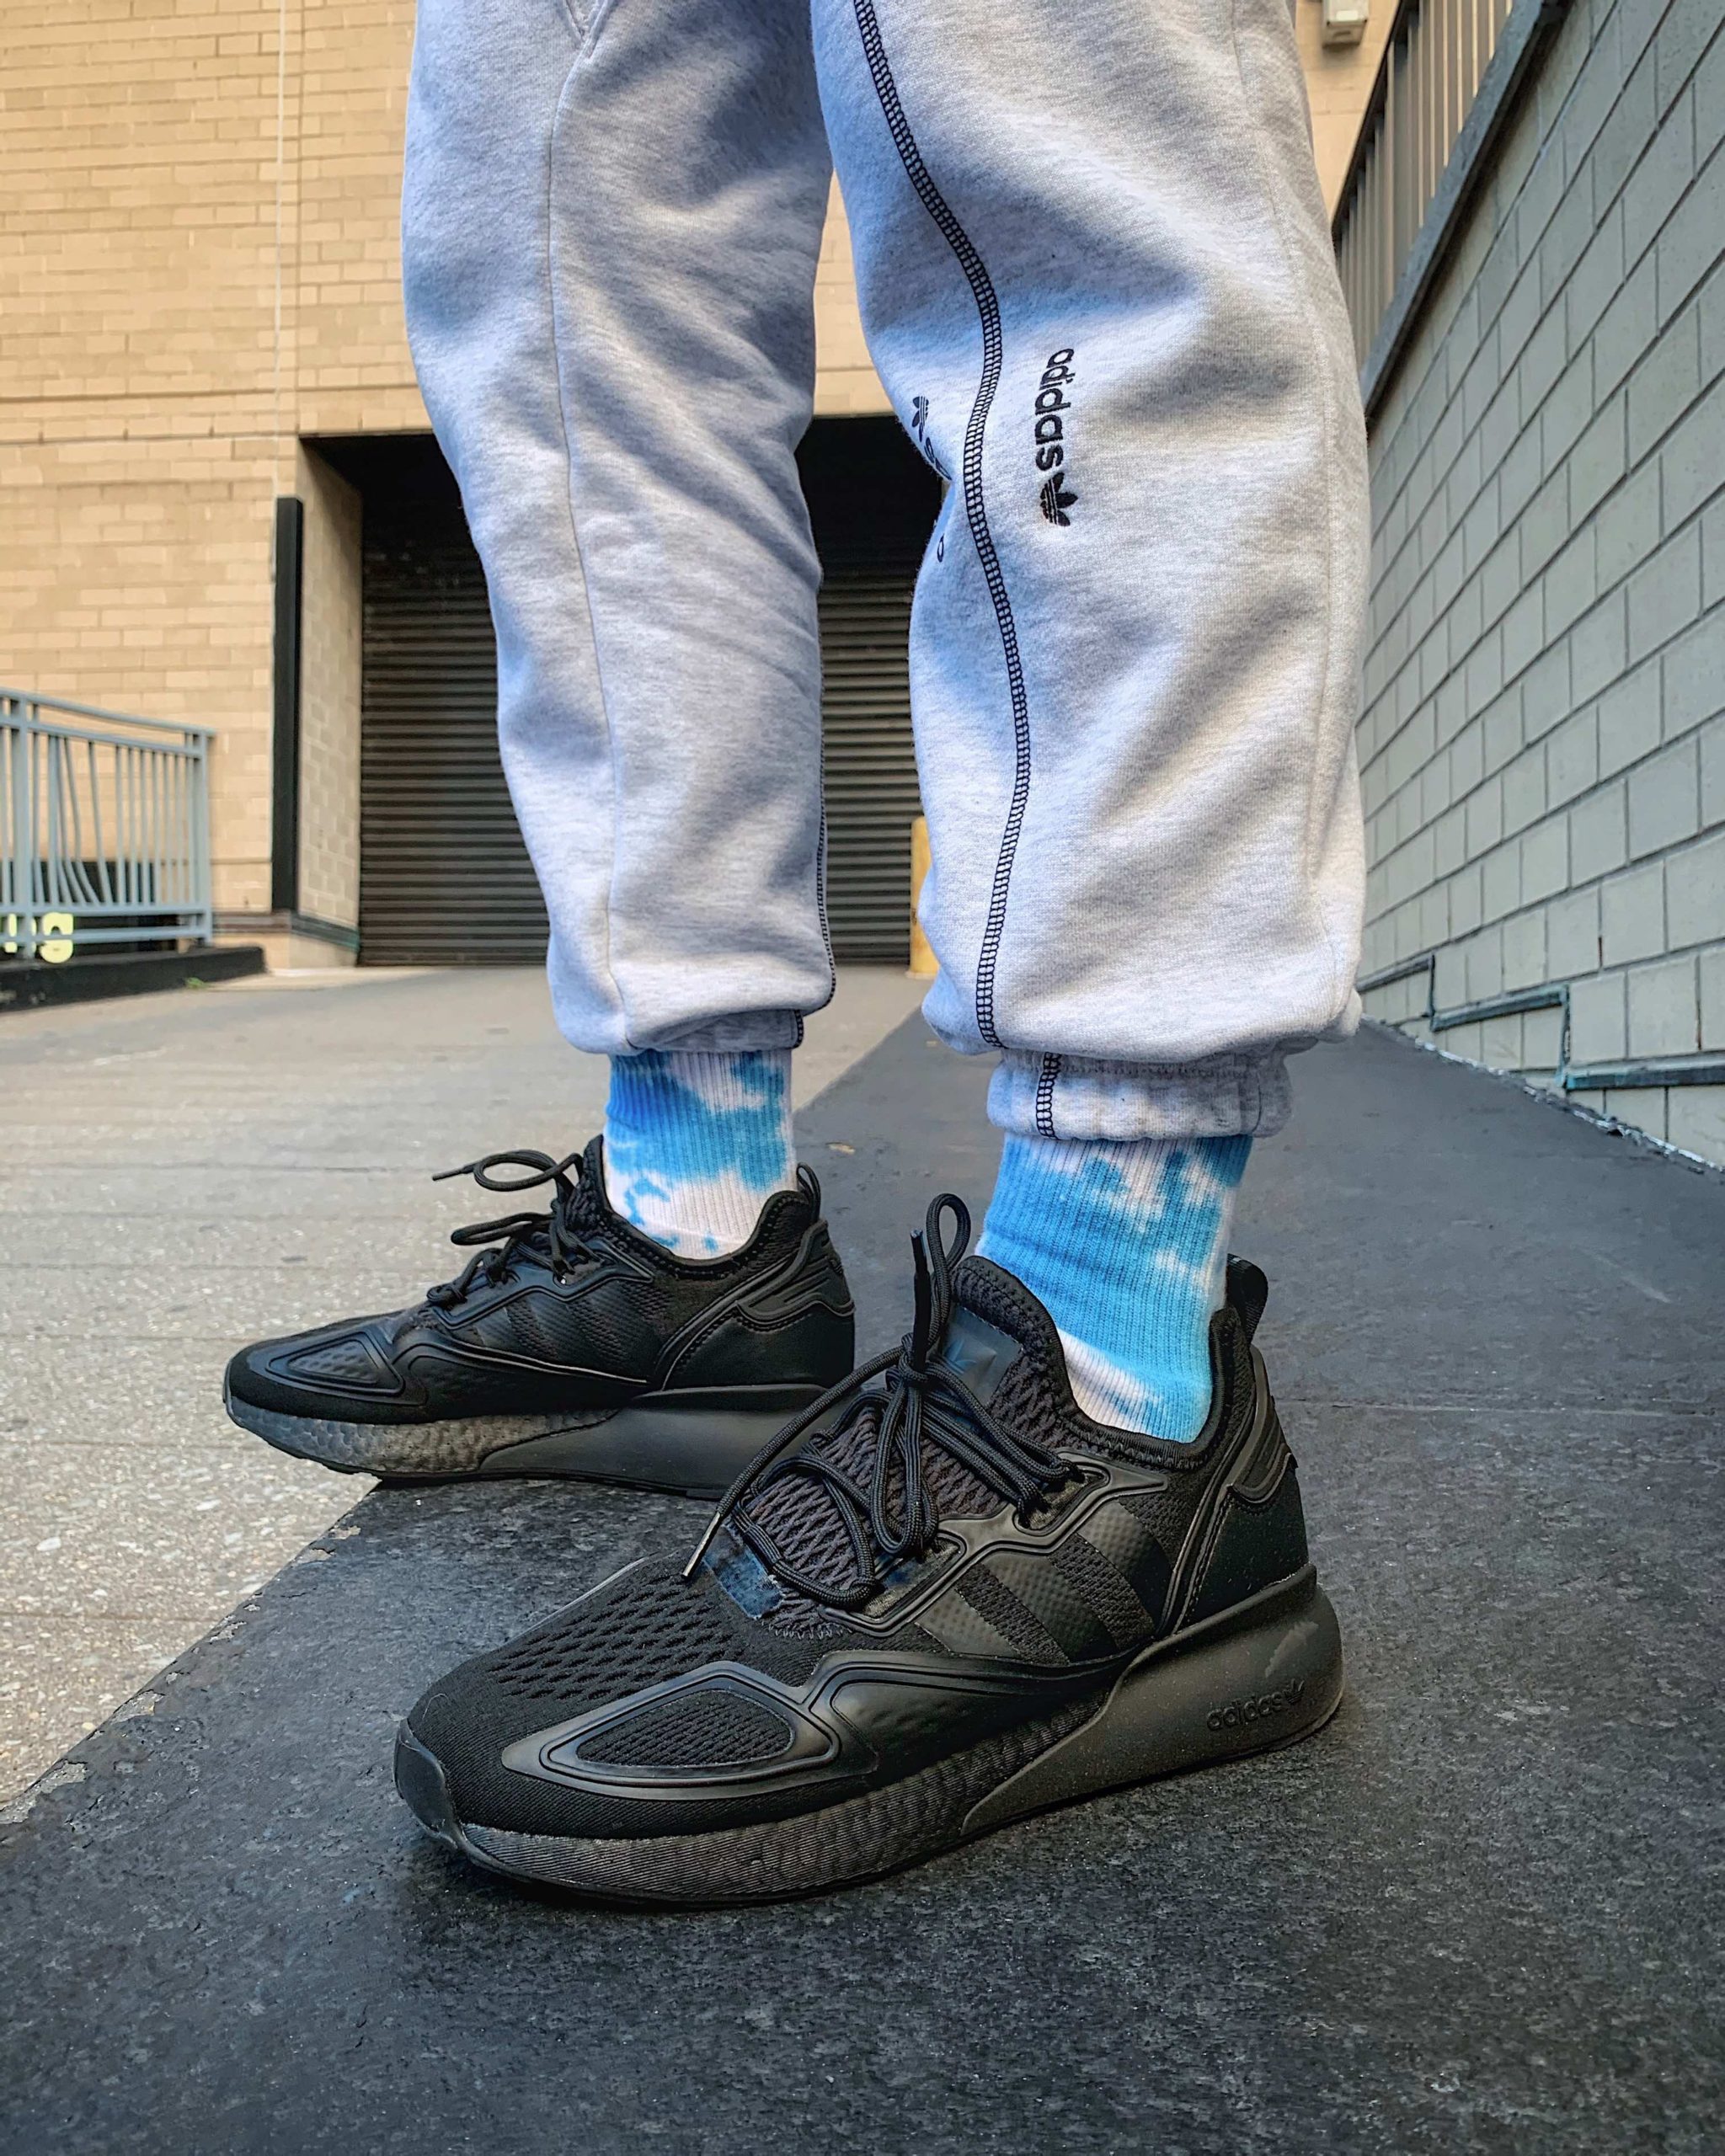 adidas zx 2k boost black street style on feet